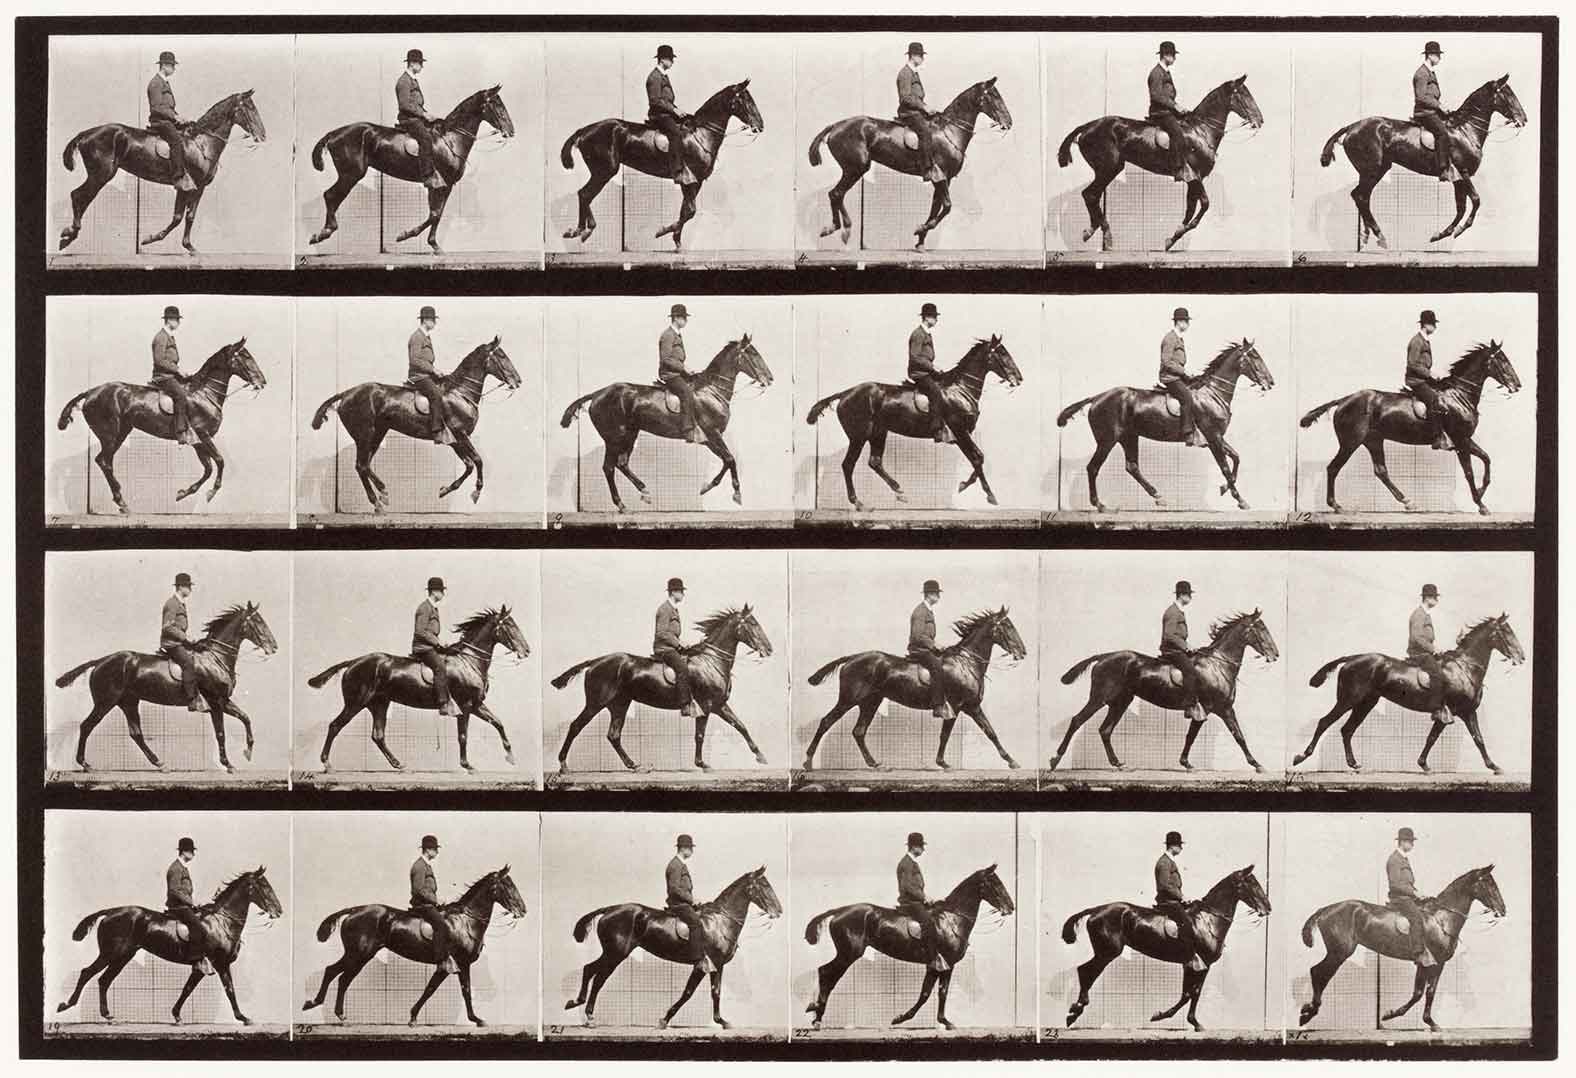 dettaglio di Animal Locomotion Portfolio (Daisy Cantering Straddled)
Eadweard Muybridge